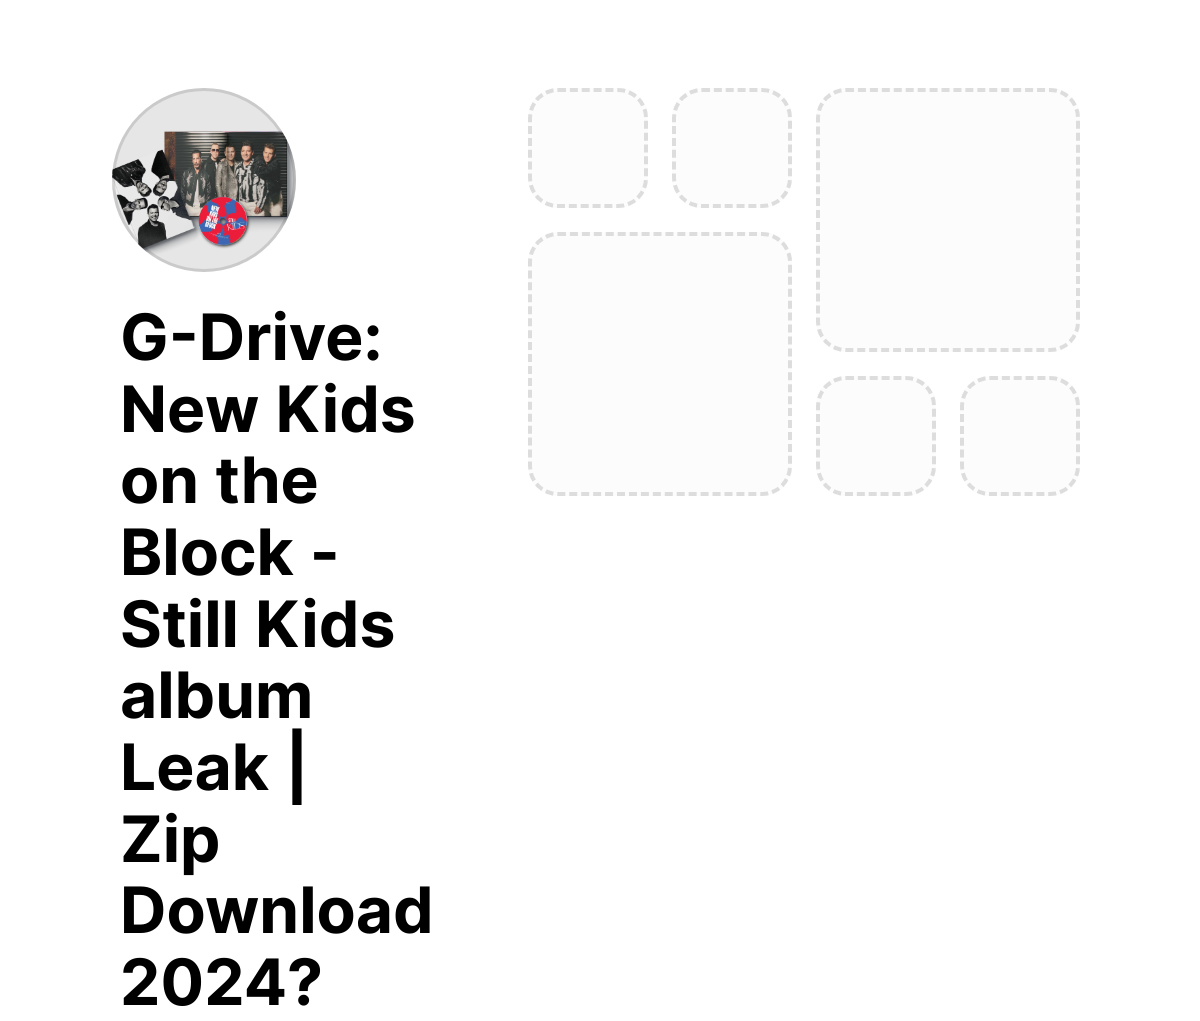 G-Drive: New Kids on the Block - Still Kids album Leak | Zip Download 2024?

